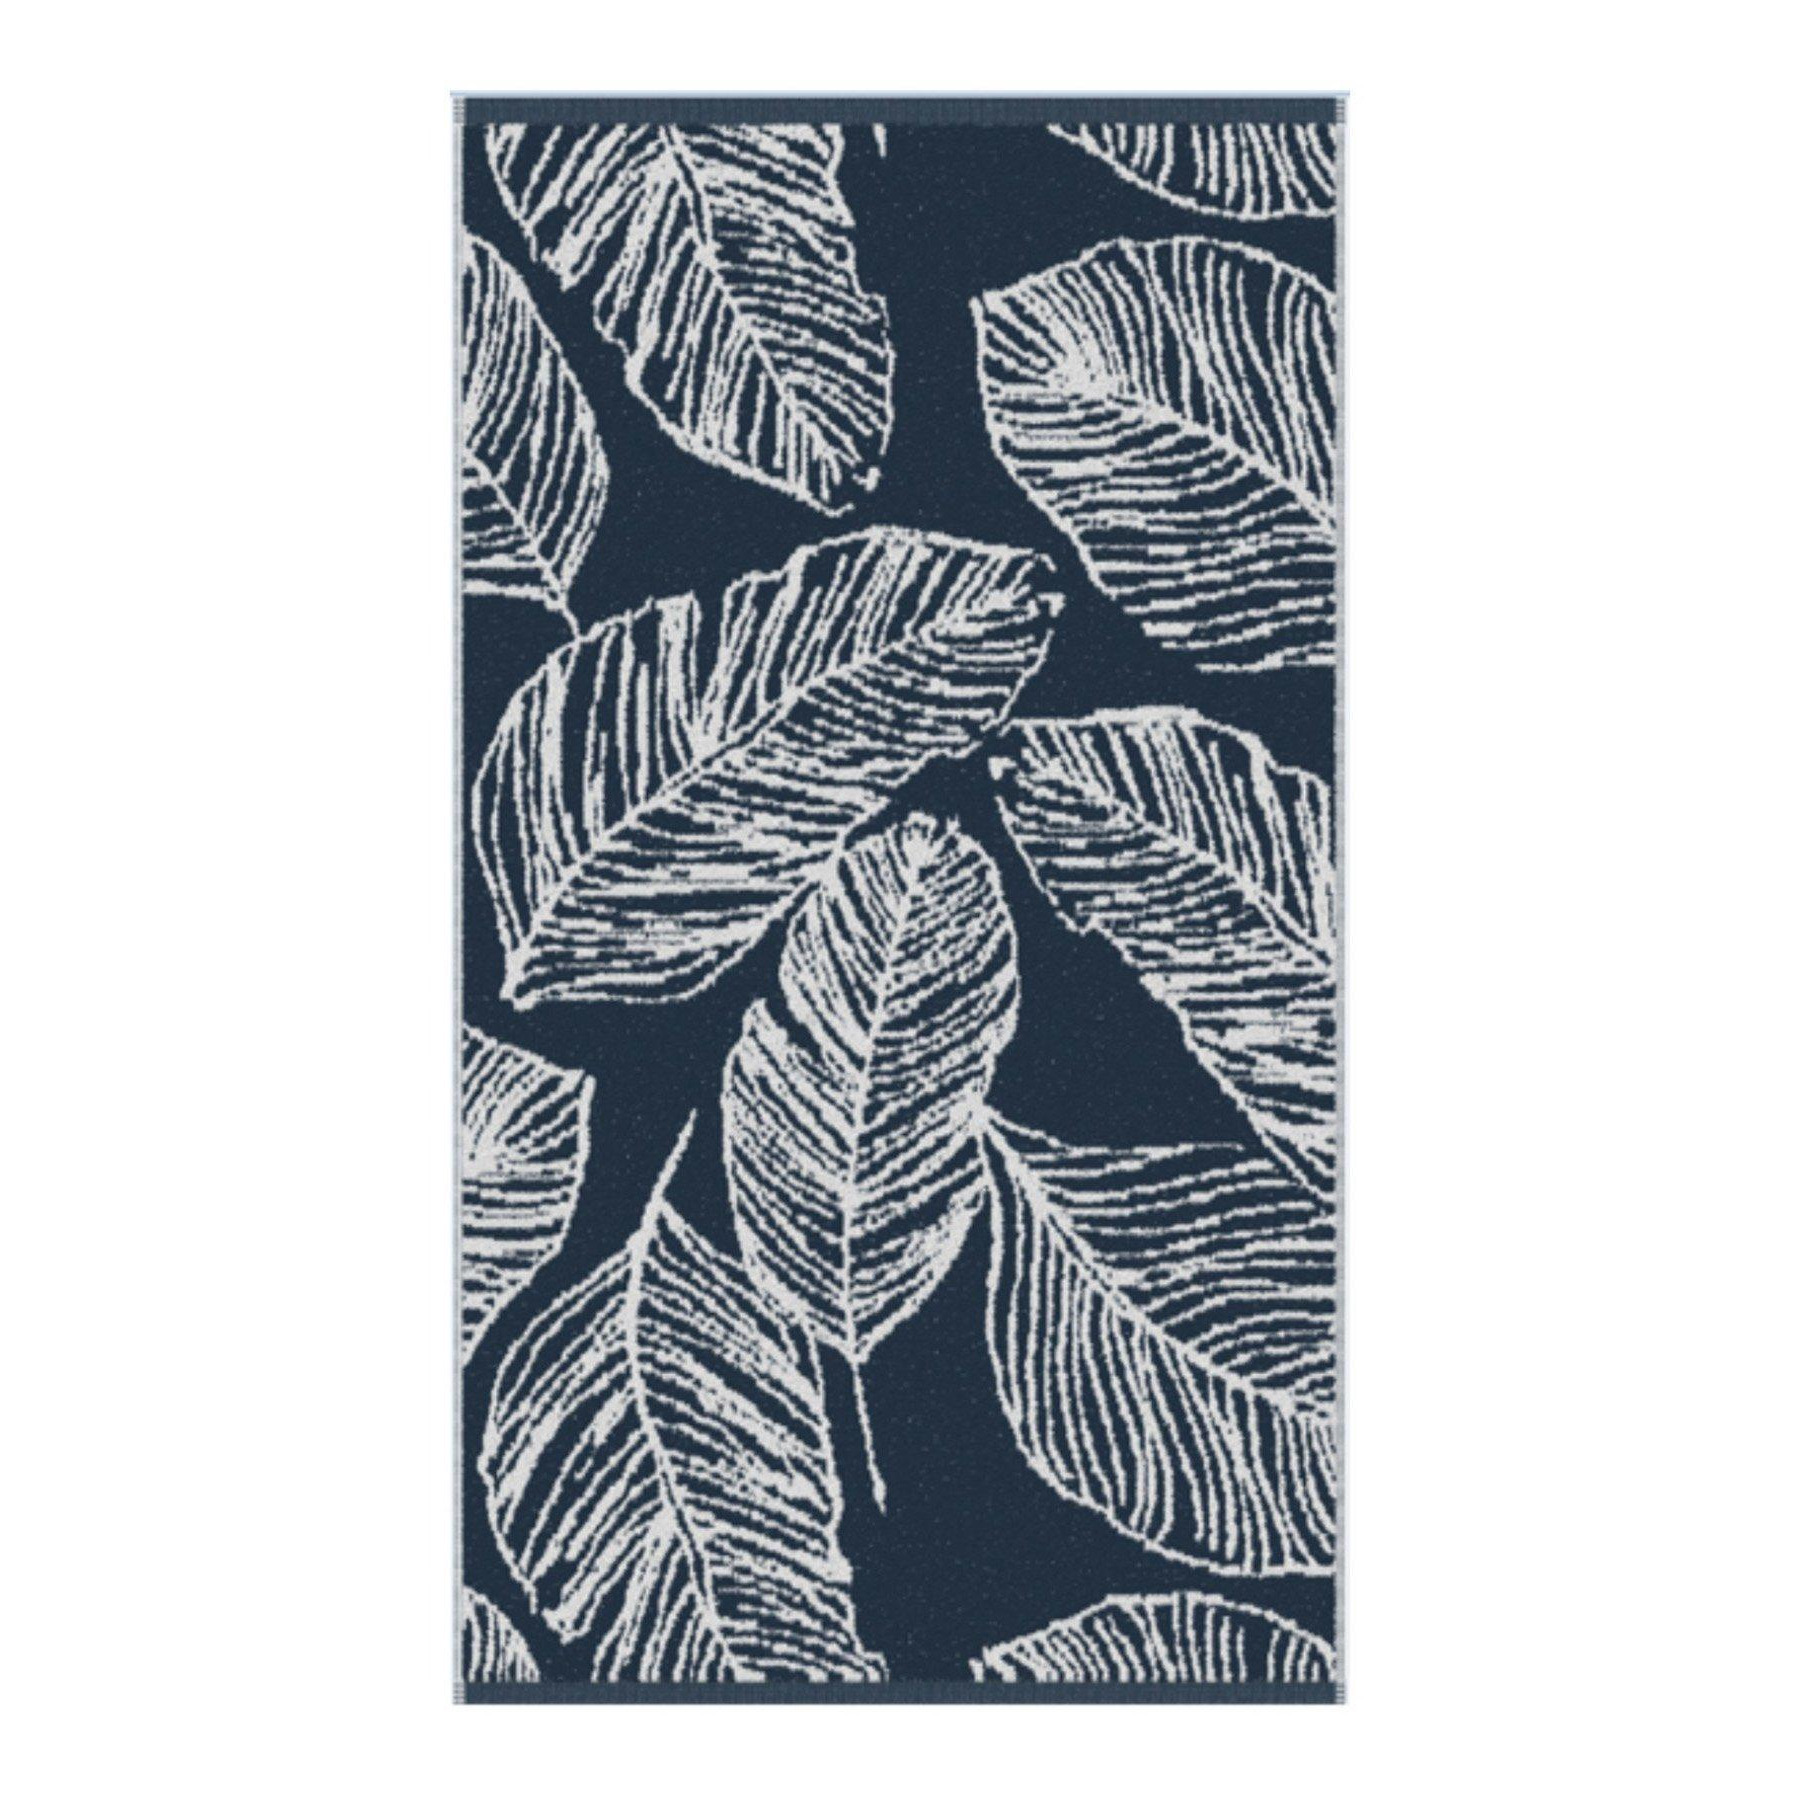 'Matteo' Luxury 100% Cotton Leaf Motif Jacquard Towel - image 1